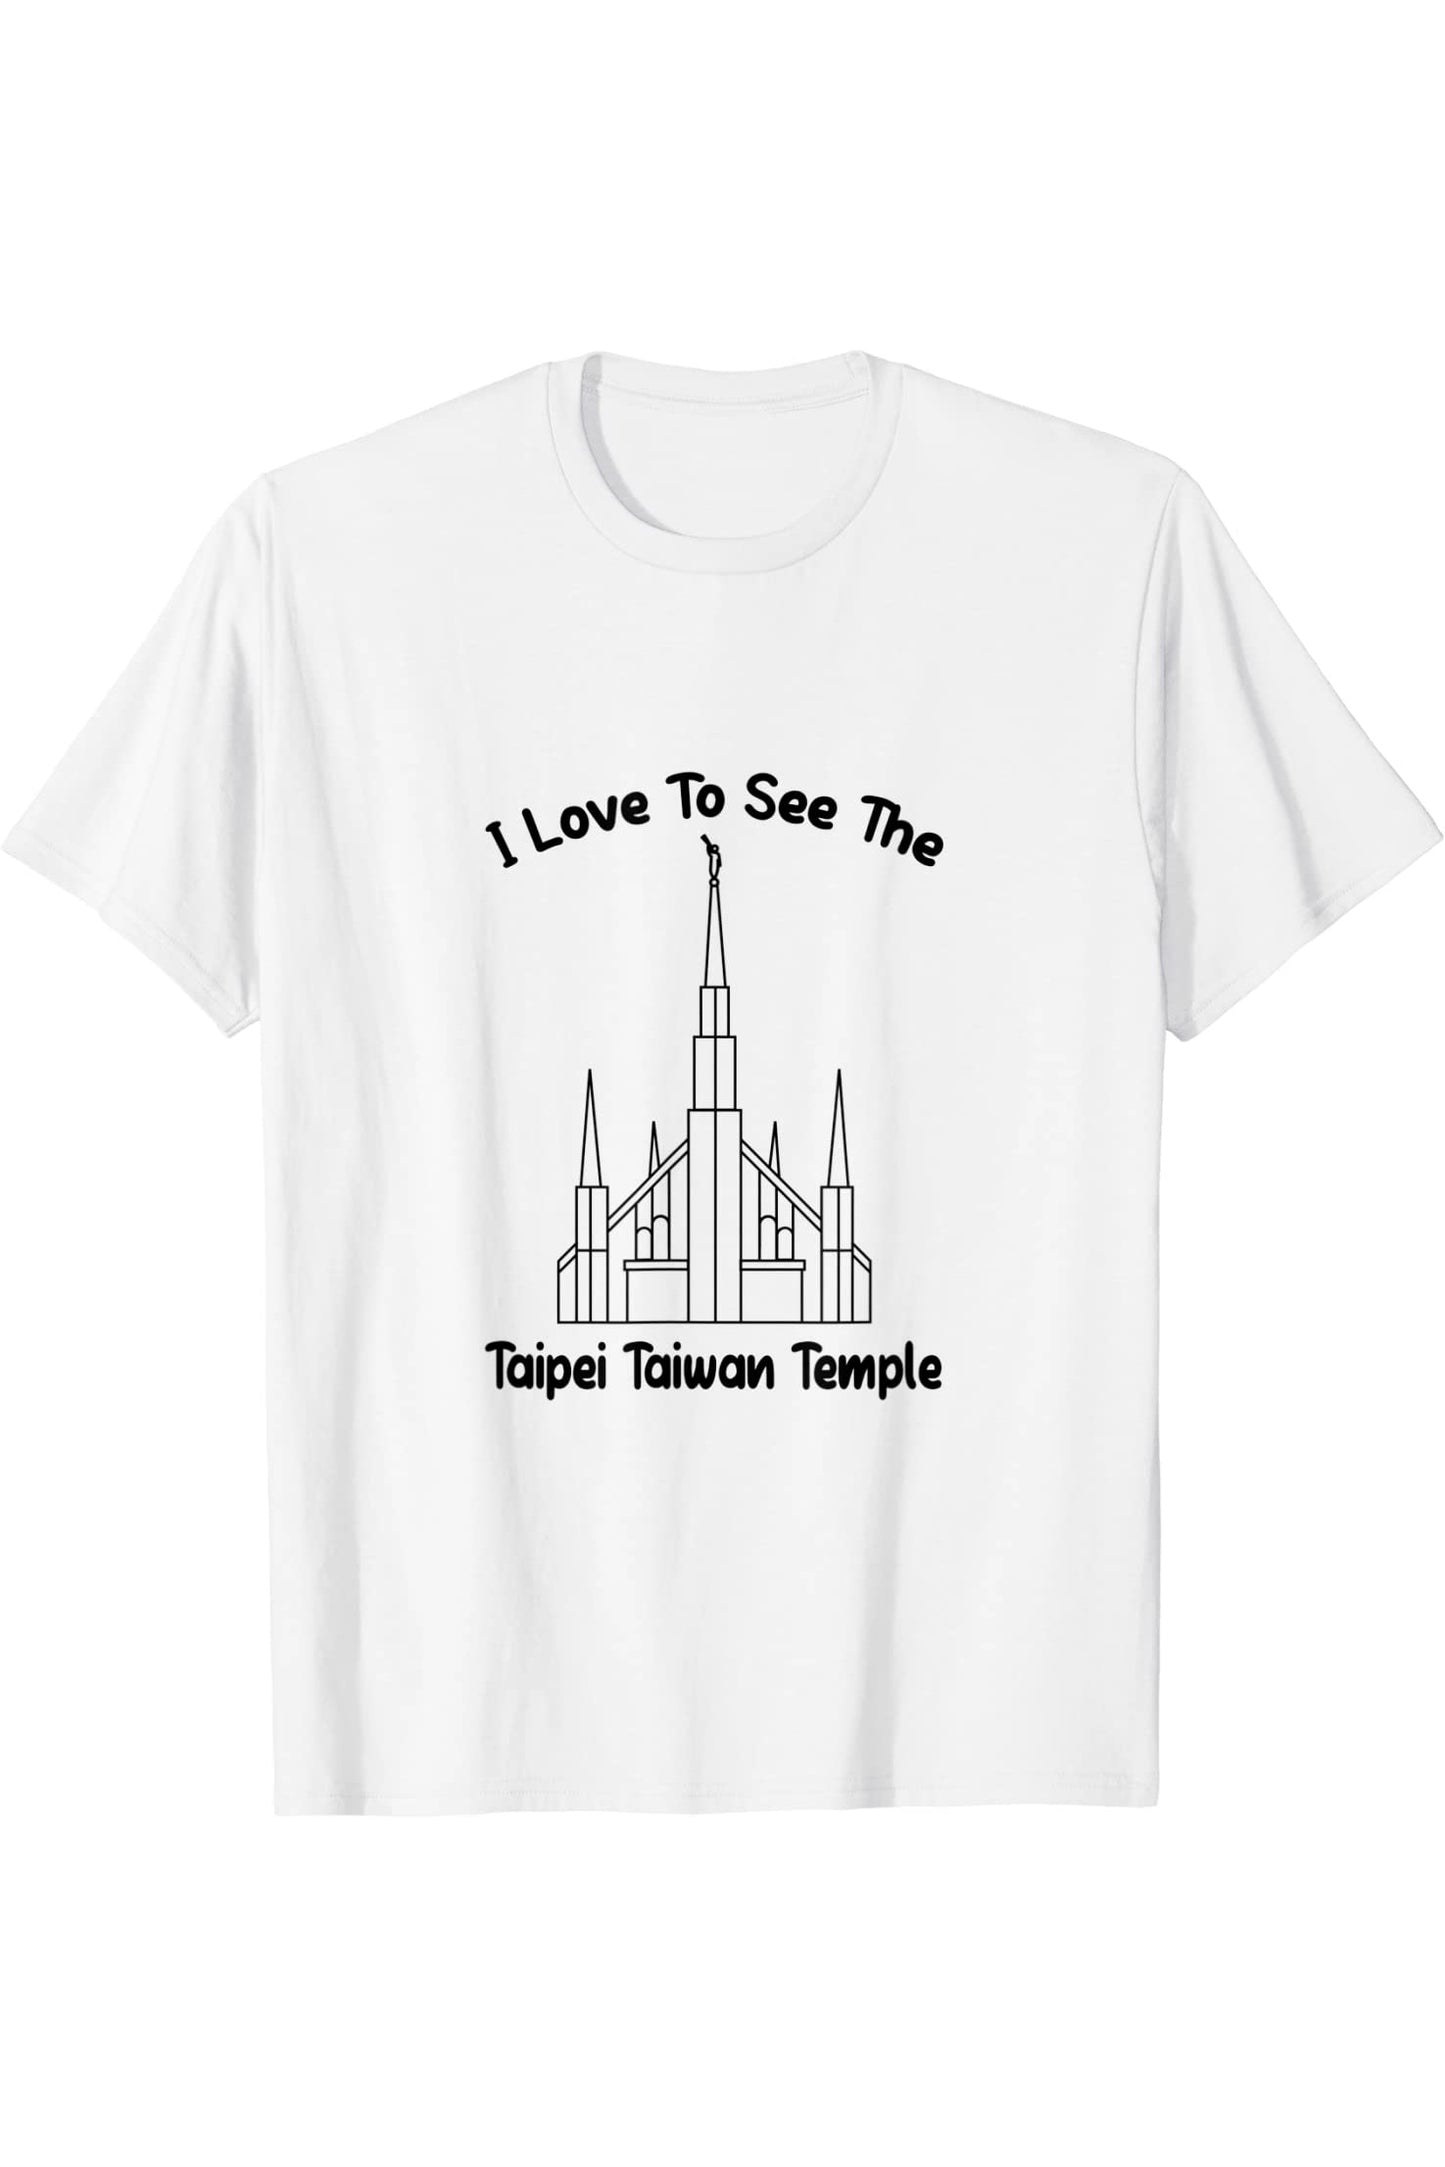 Taipei Taiwan Temple T-Shirt - Primary Style (English) US